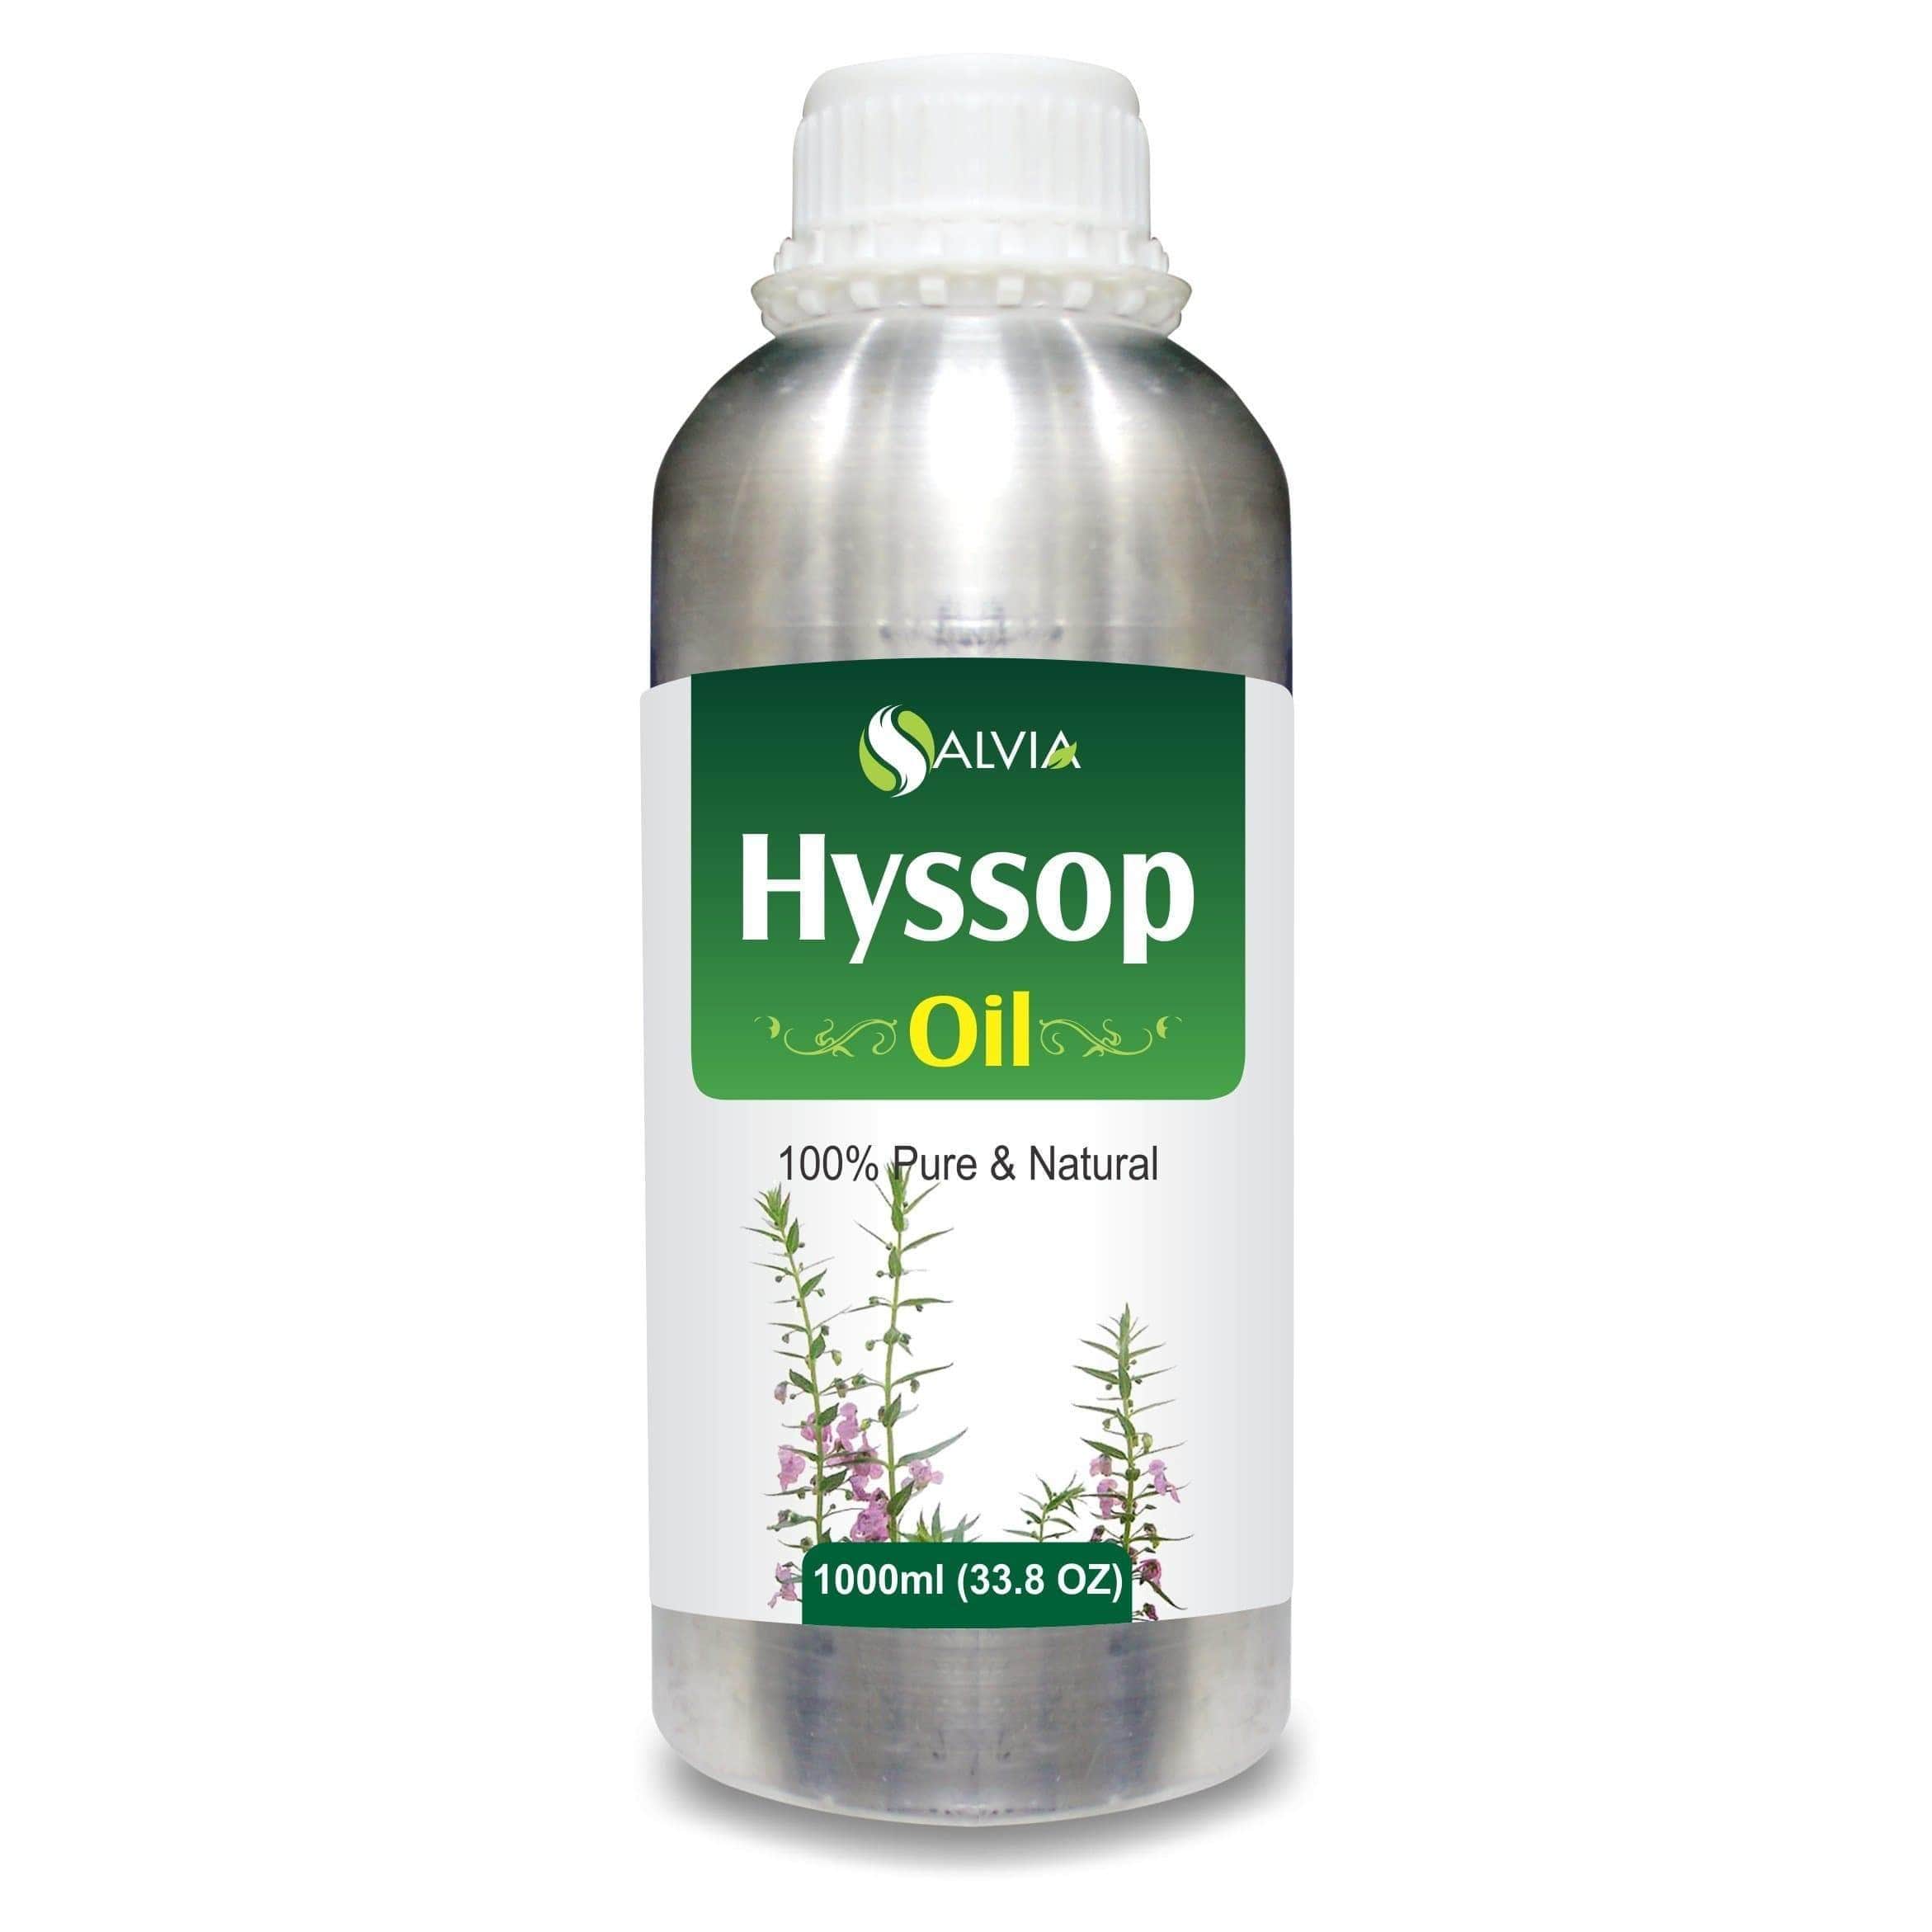 hyssop oil of life